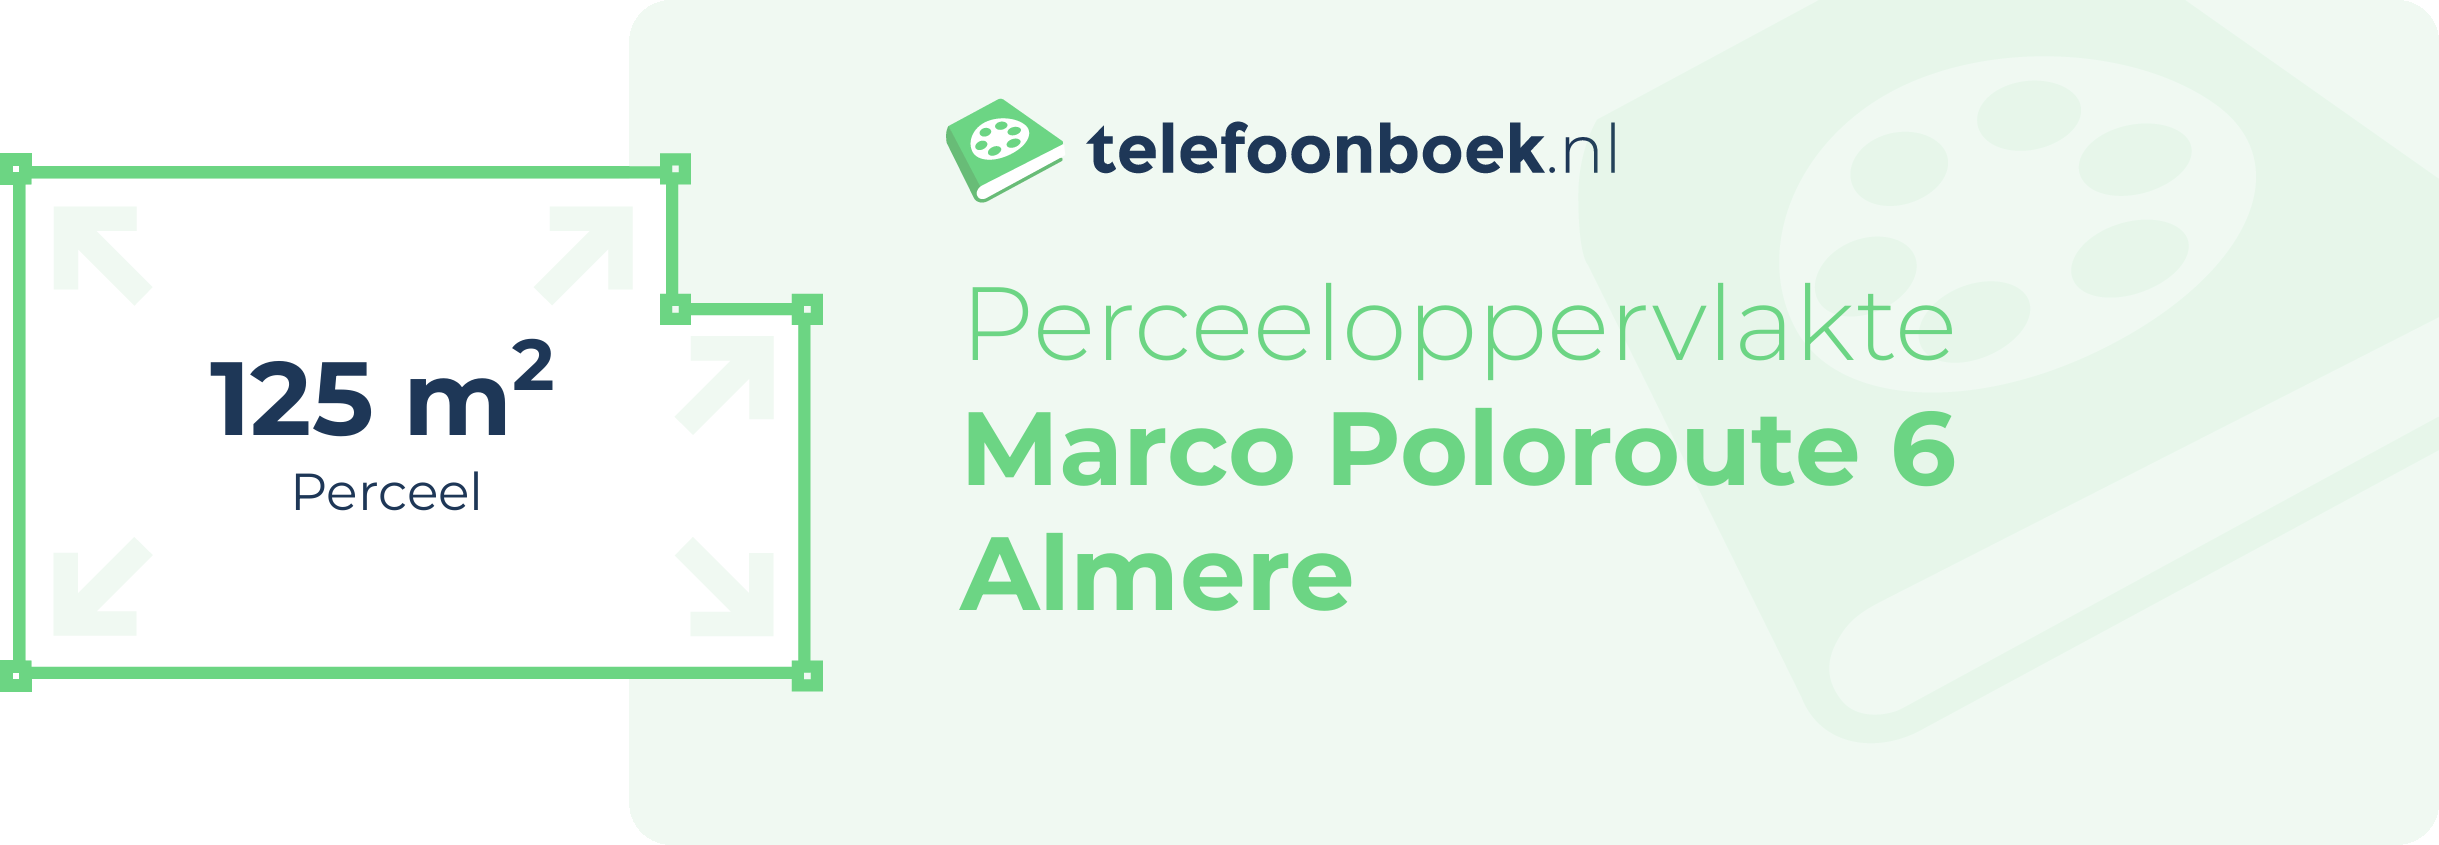 Perceeloppervlakte Marco Poloroute 6 Almere